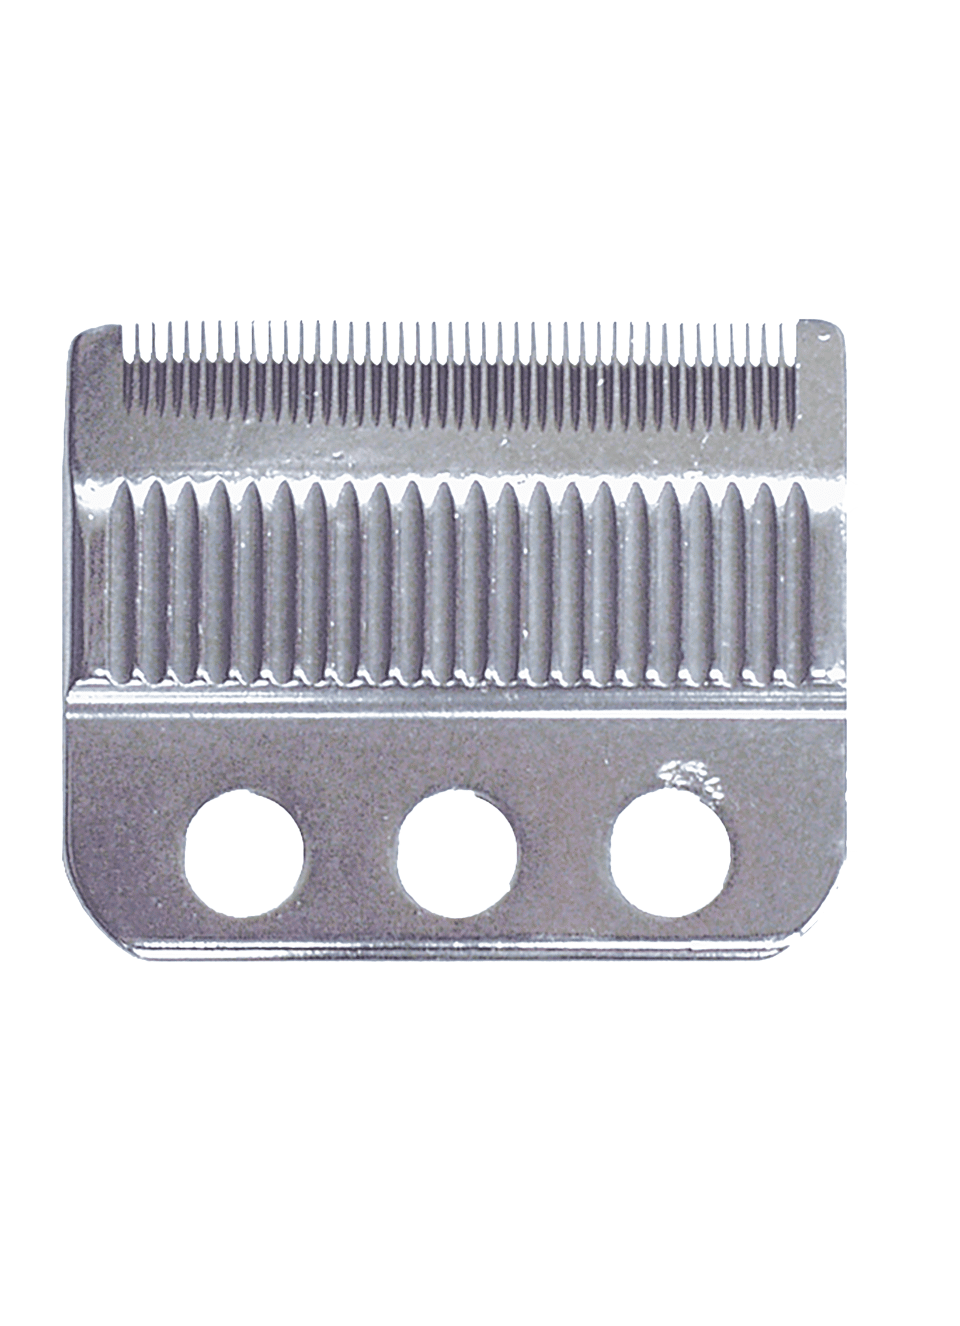 wahl designer clipper replacement blades